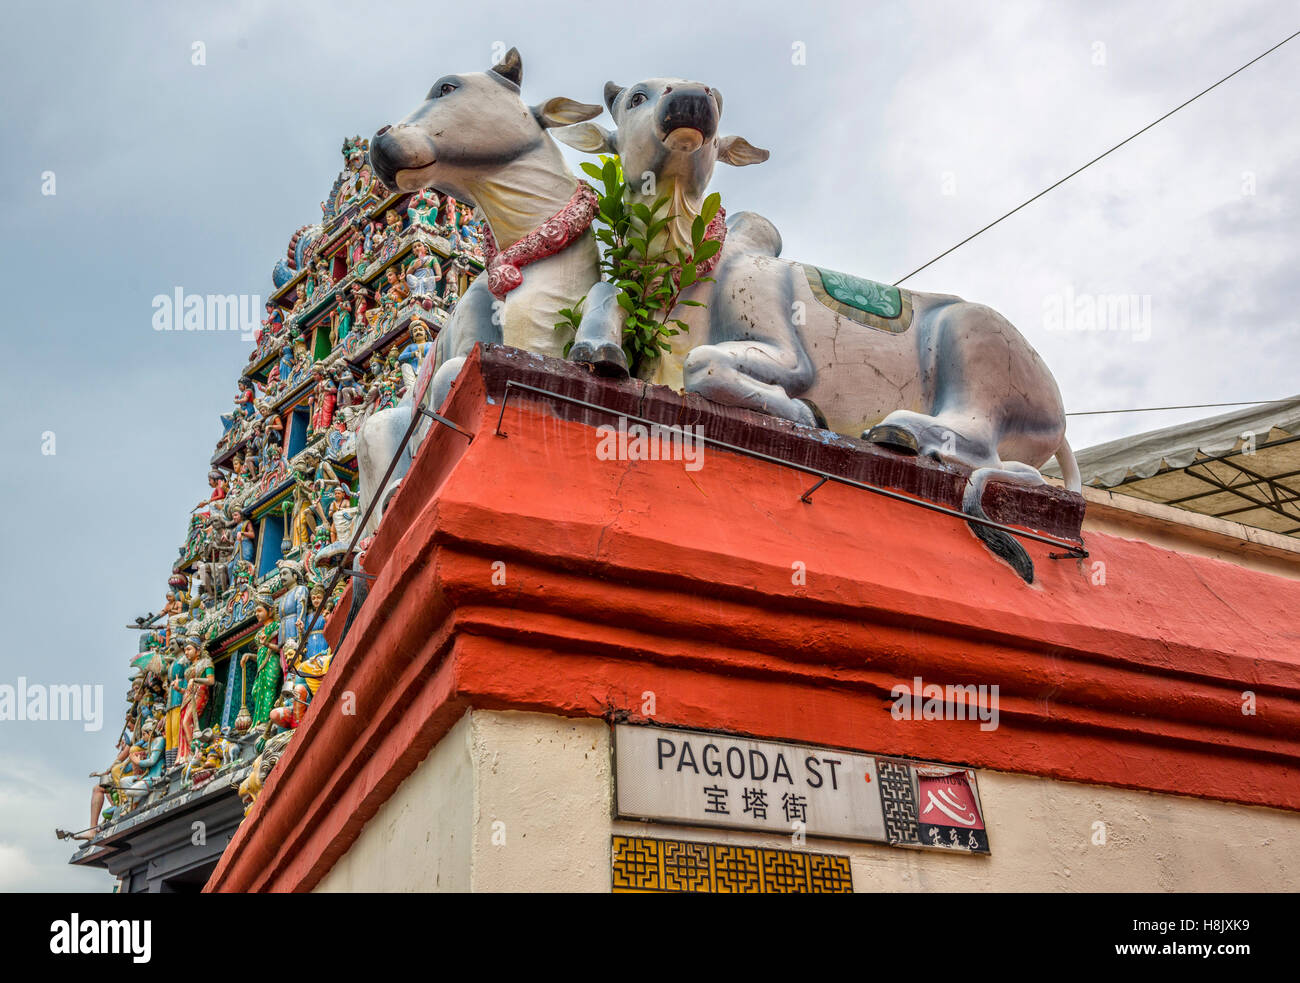 Sri Mariamman Hindu Temple with two sacred cows, Pagoda Street, Singapore Stock Photo